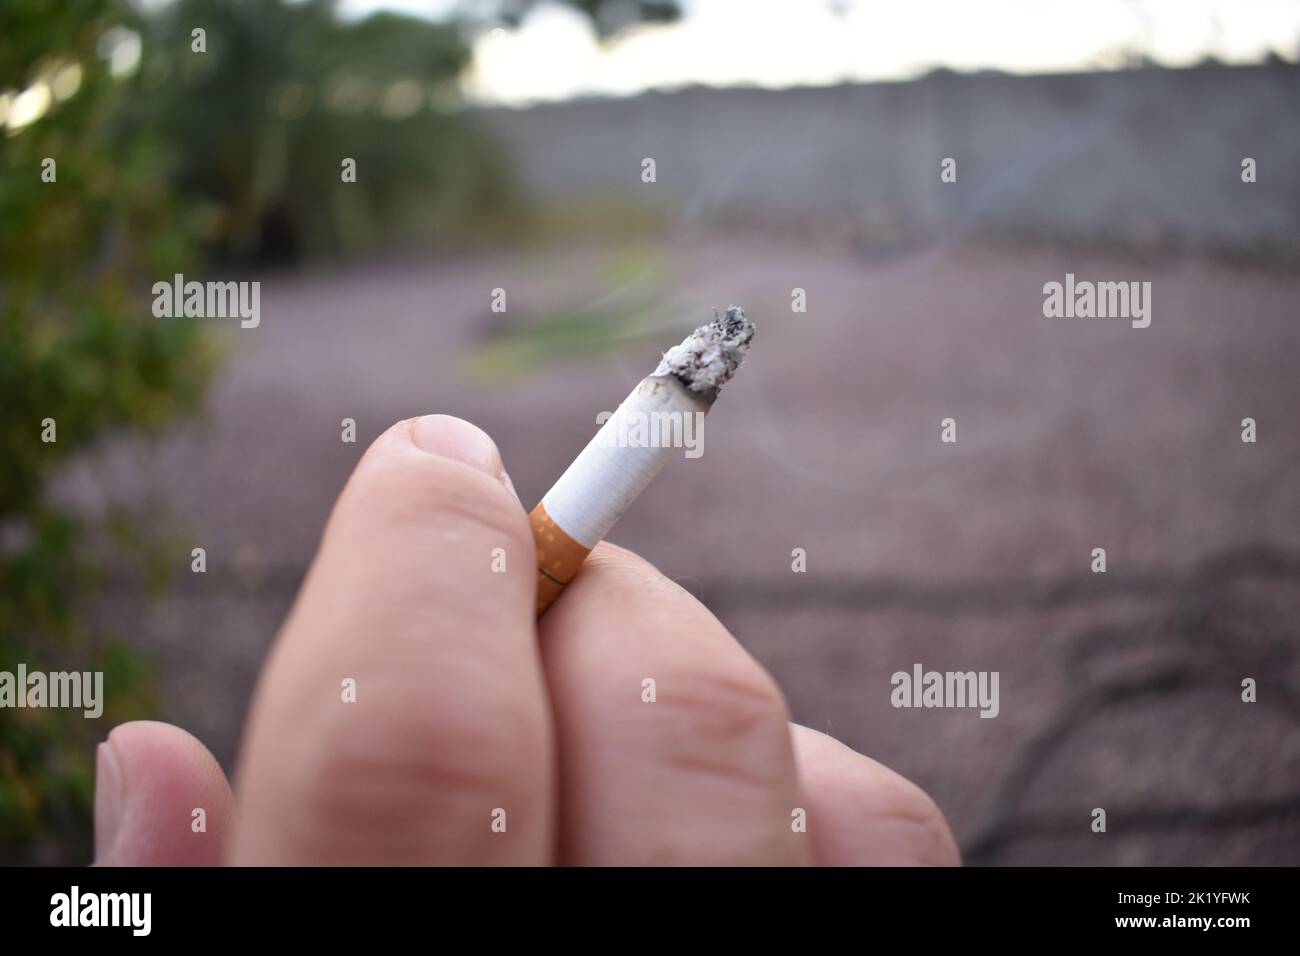 Burning Cigarette Man Smoking Gross Unhealthy Habit  Stock Photo